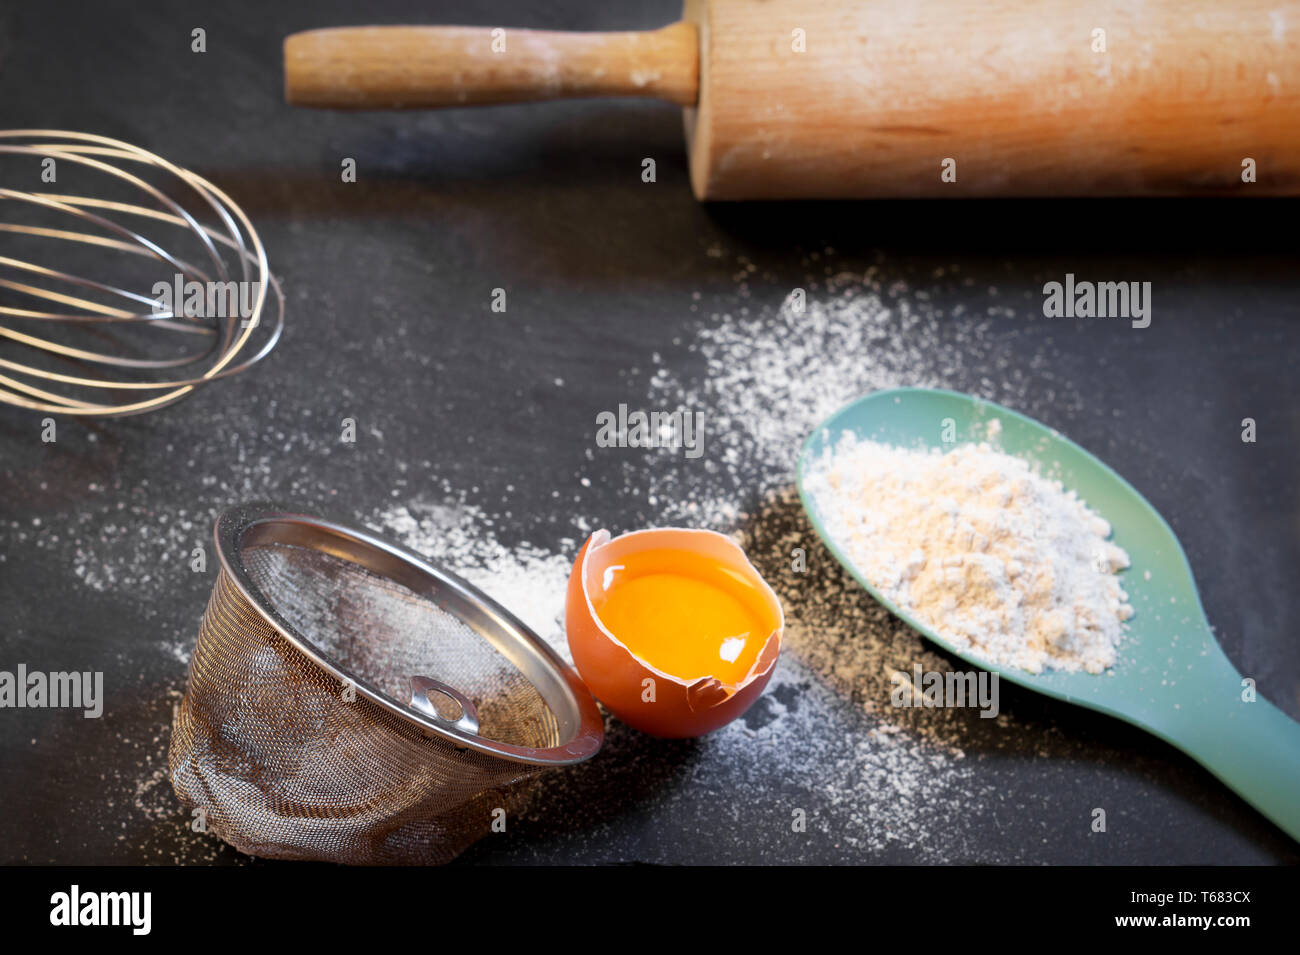 Baking ingredients - flour, egg yolk and eggshells on black chalkboard Stock Photo